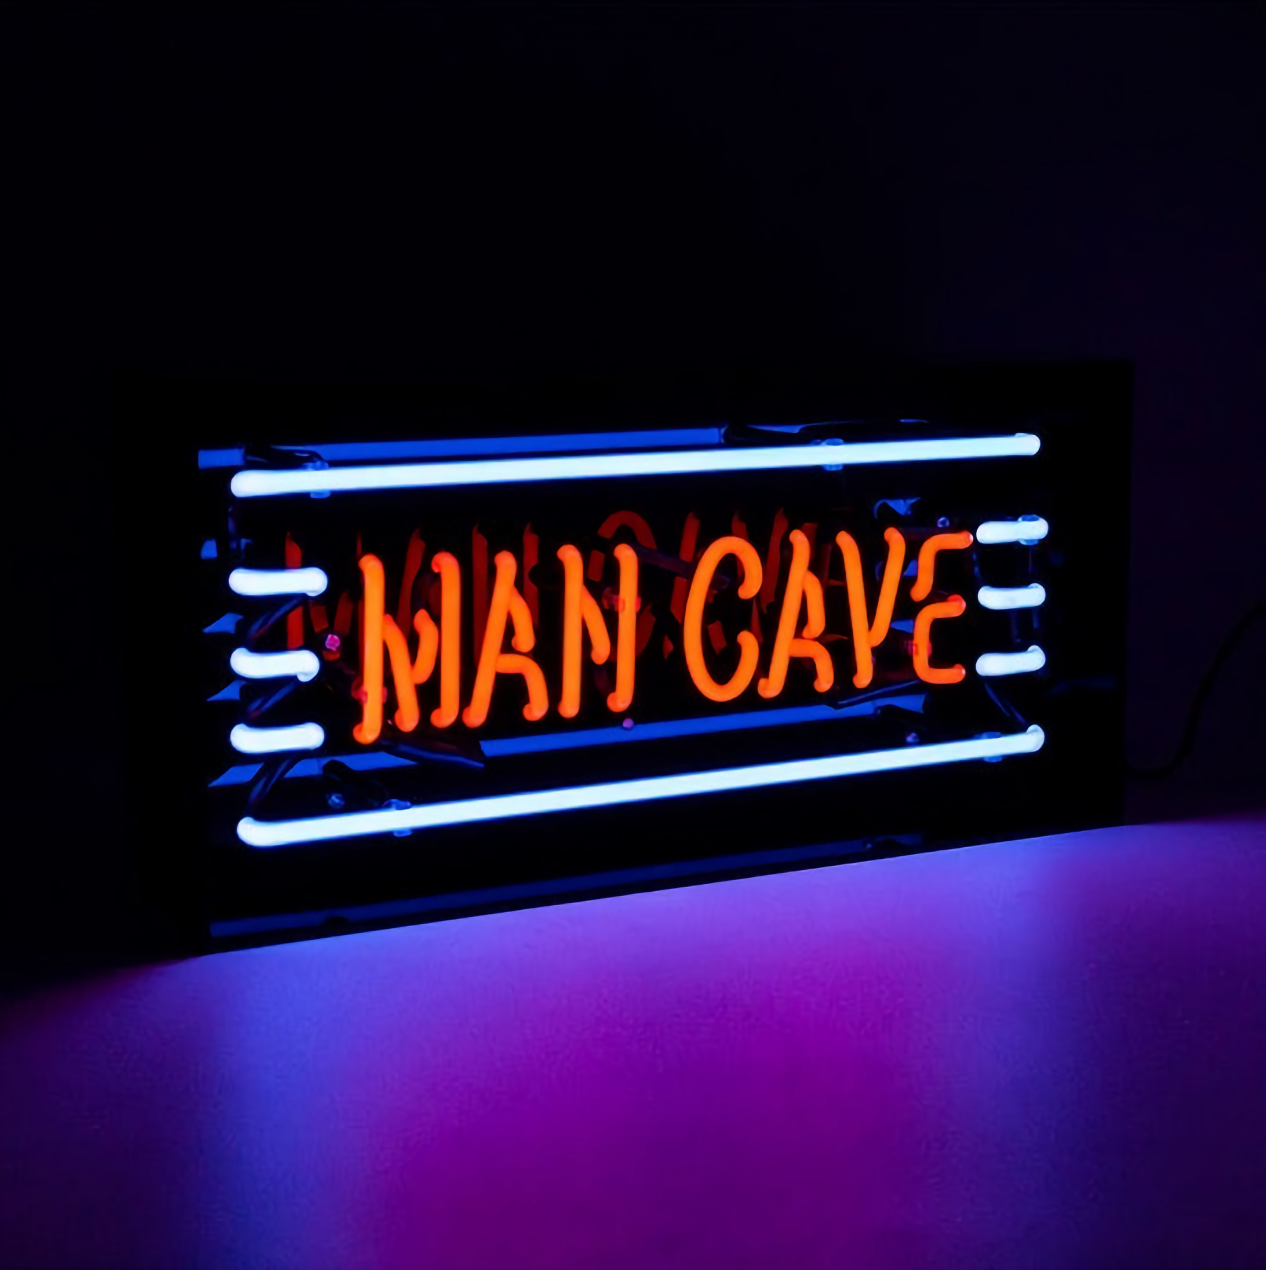 Man Cave Neon Box Light